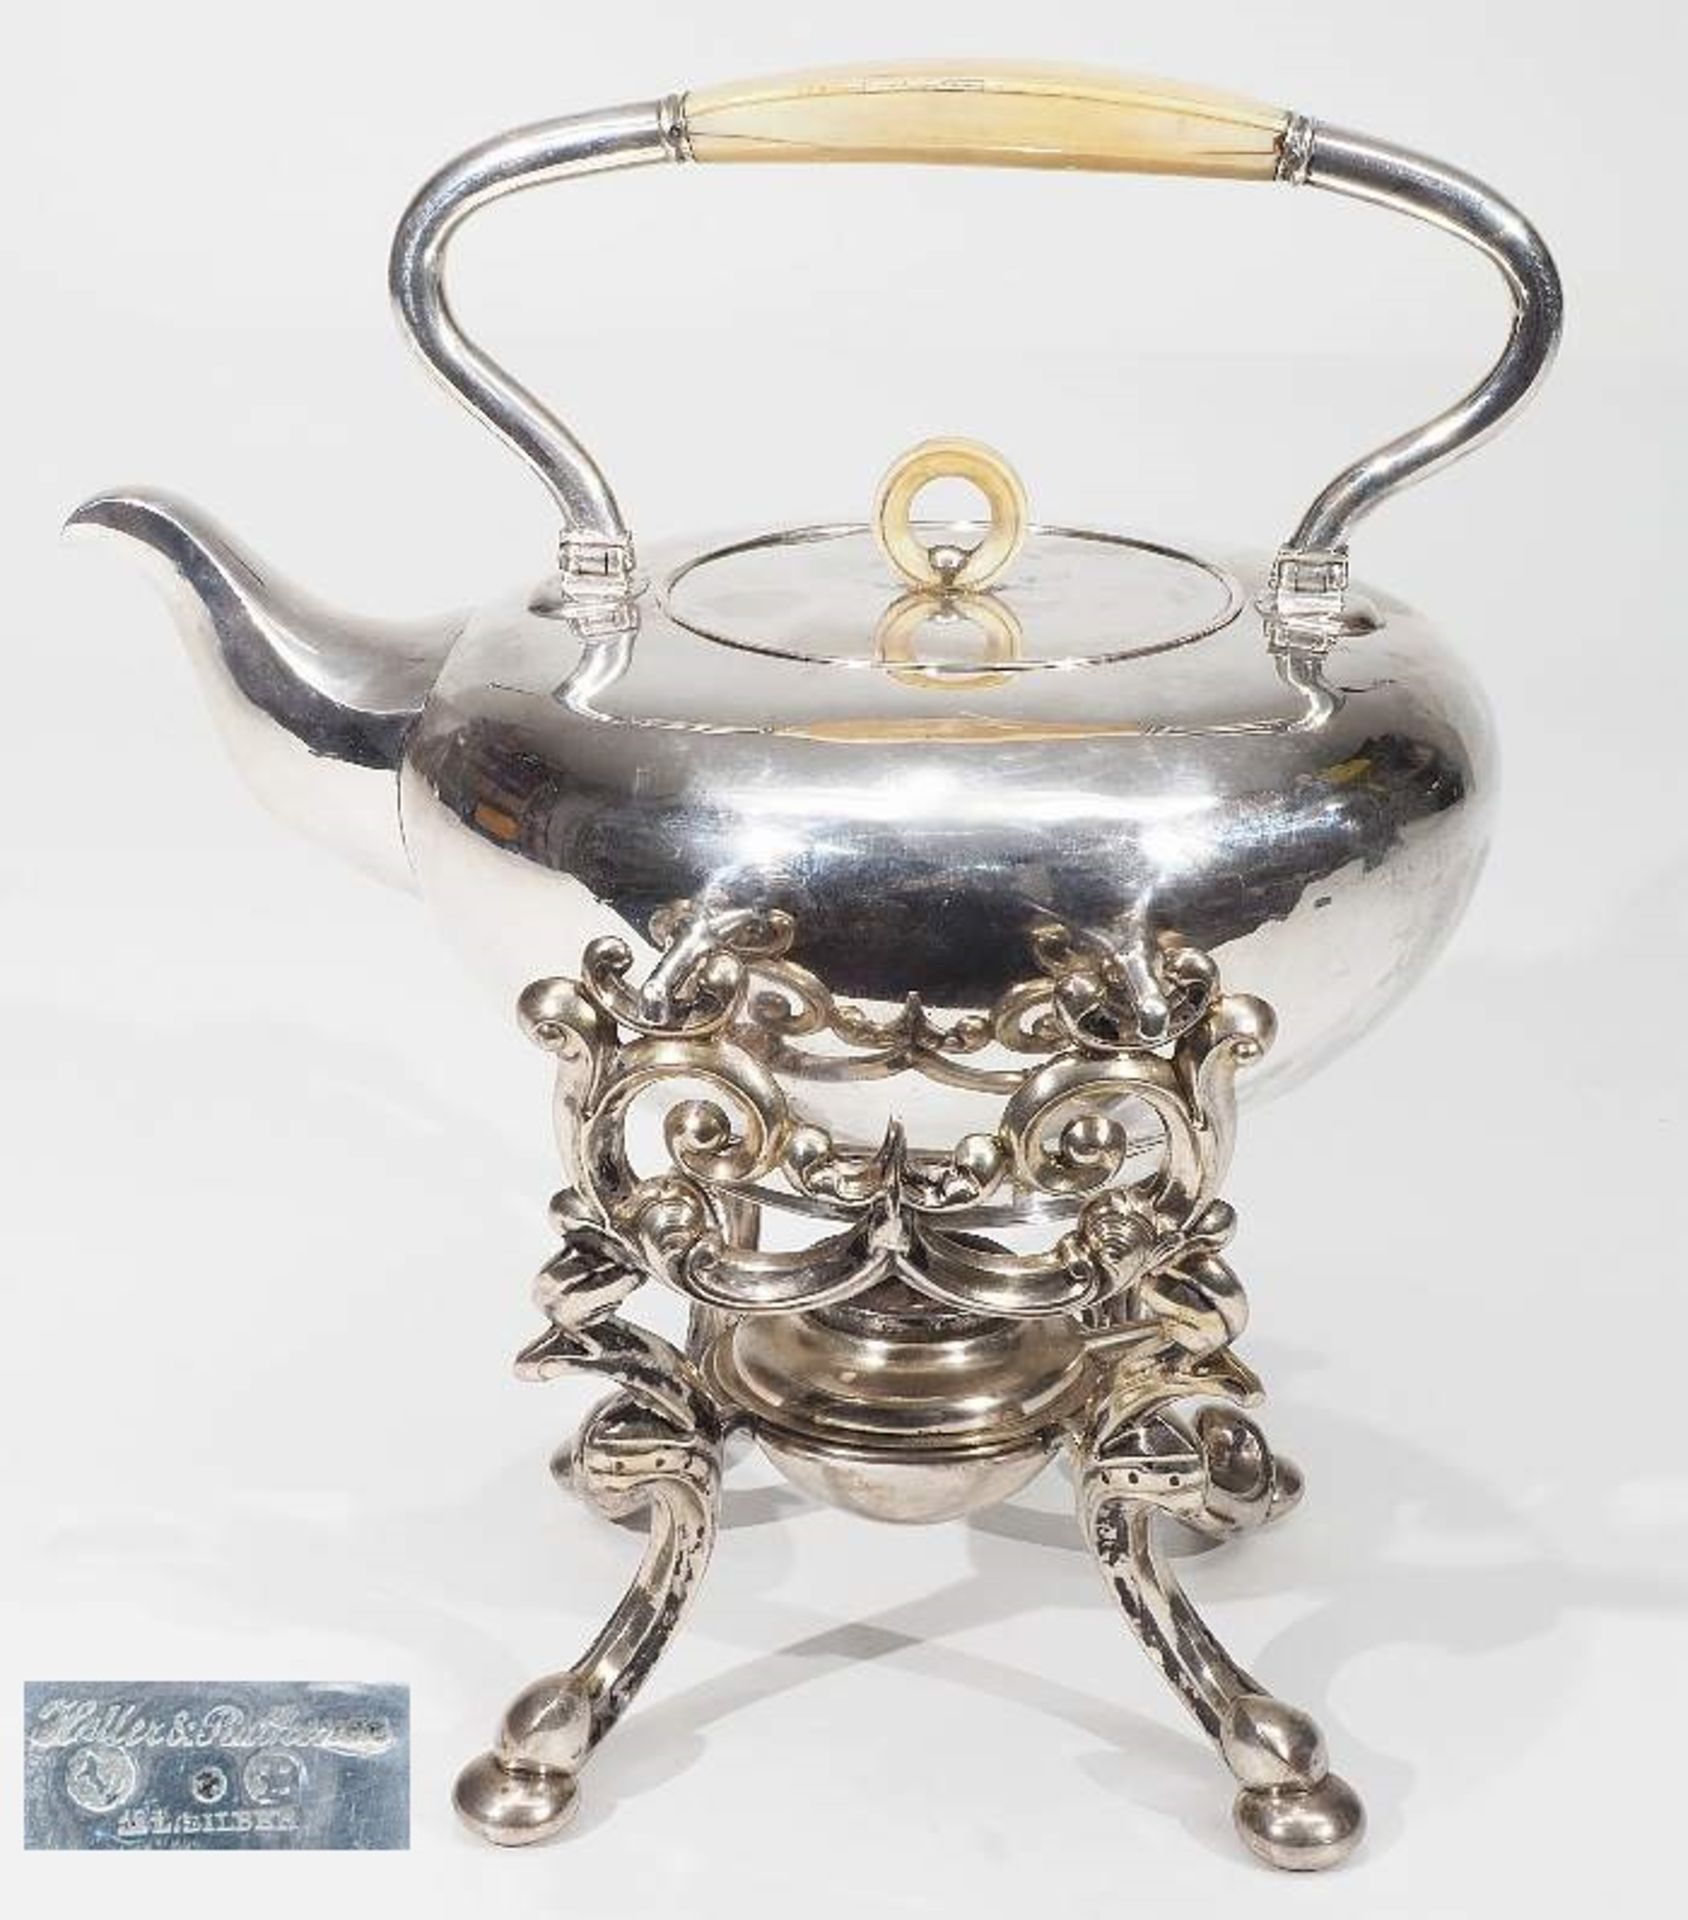 Teekessel auf Rechaud, 12 Lot Silber, um 1800 - etwa 1857, ( = 750er Silber ). Hofjuwelier Haller &